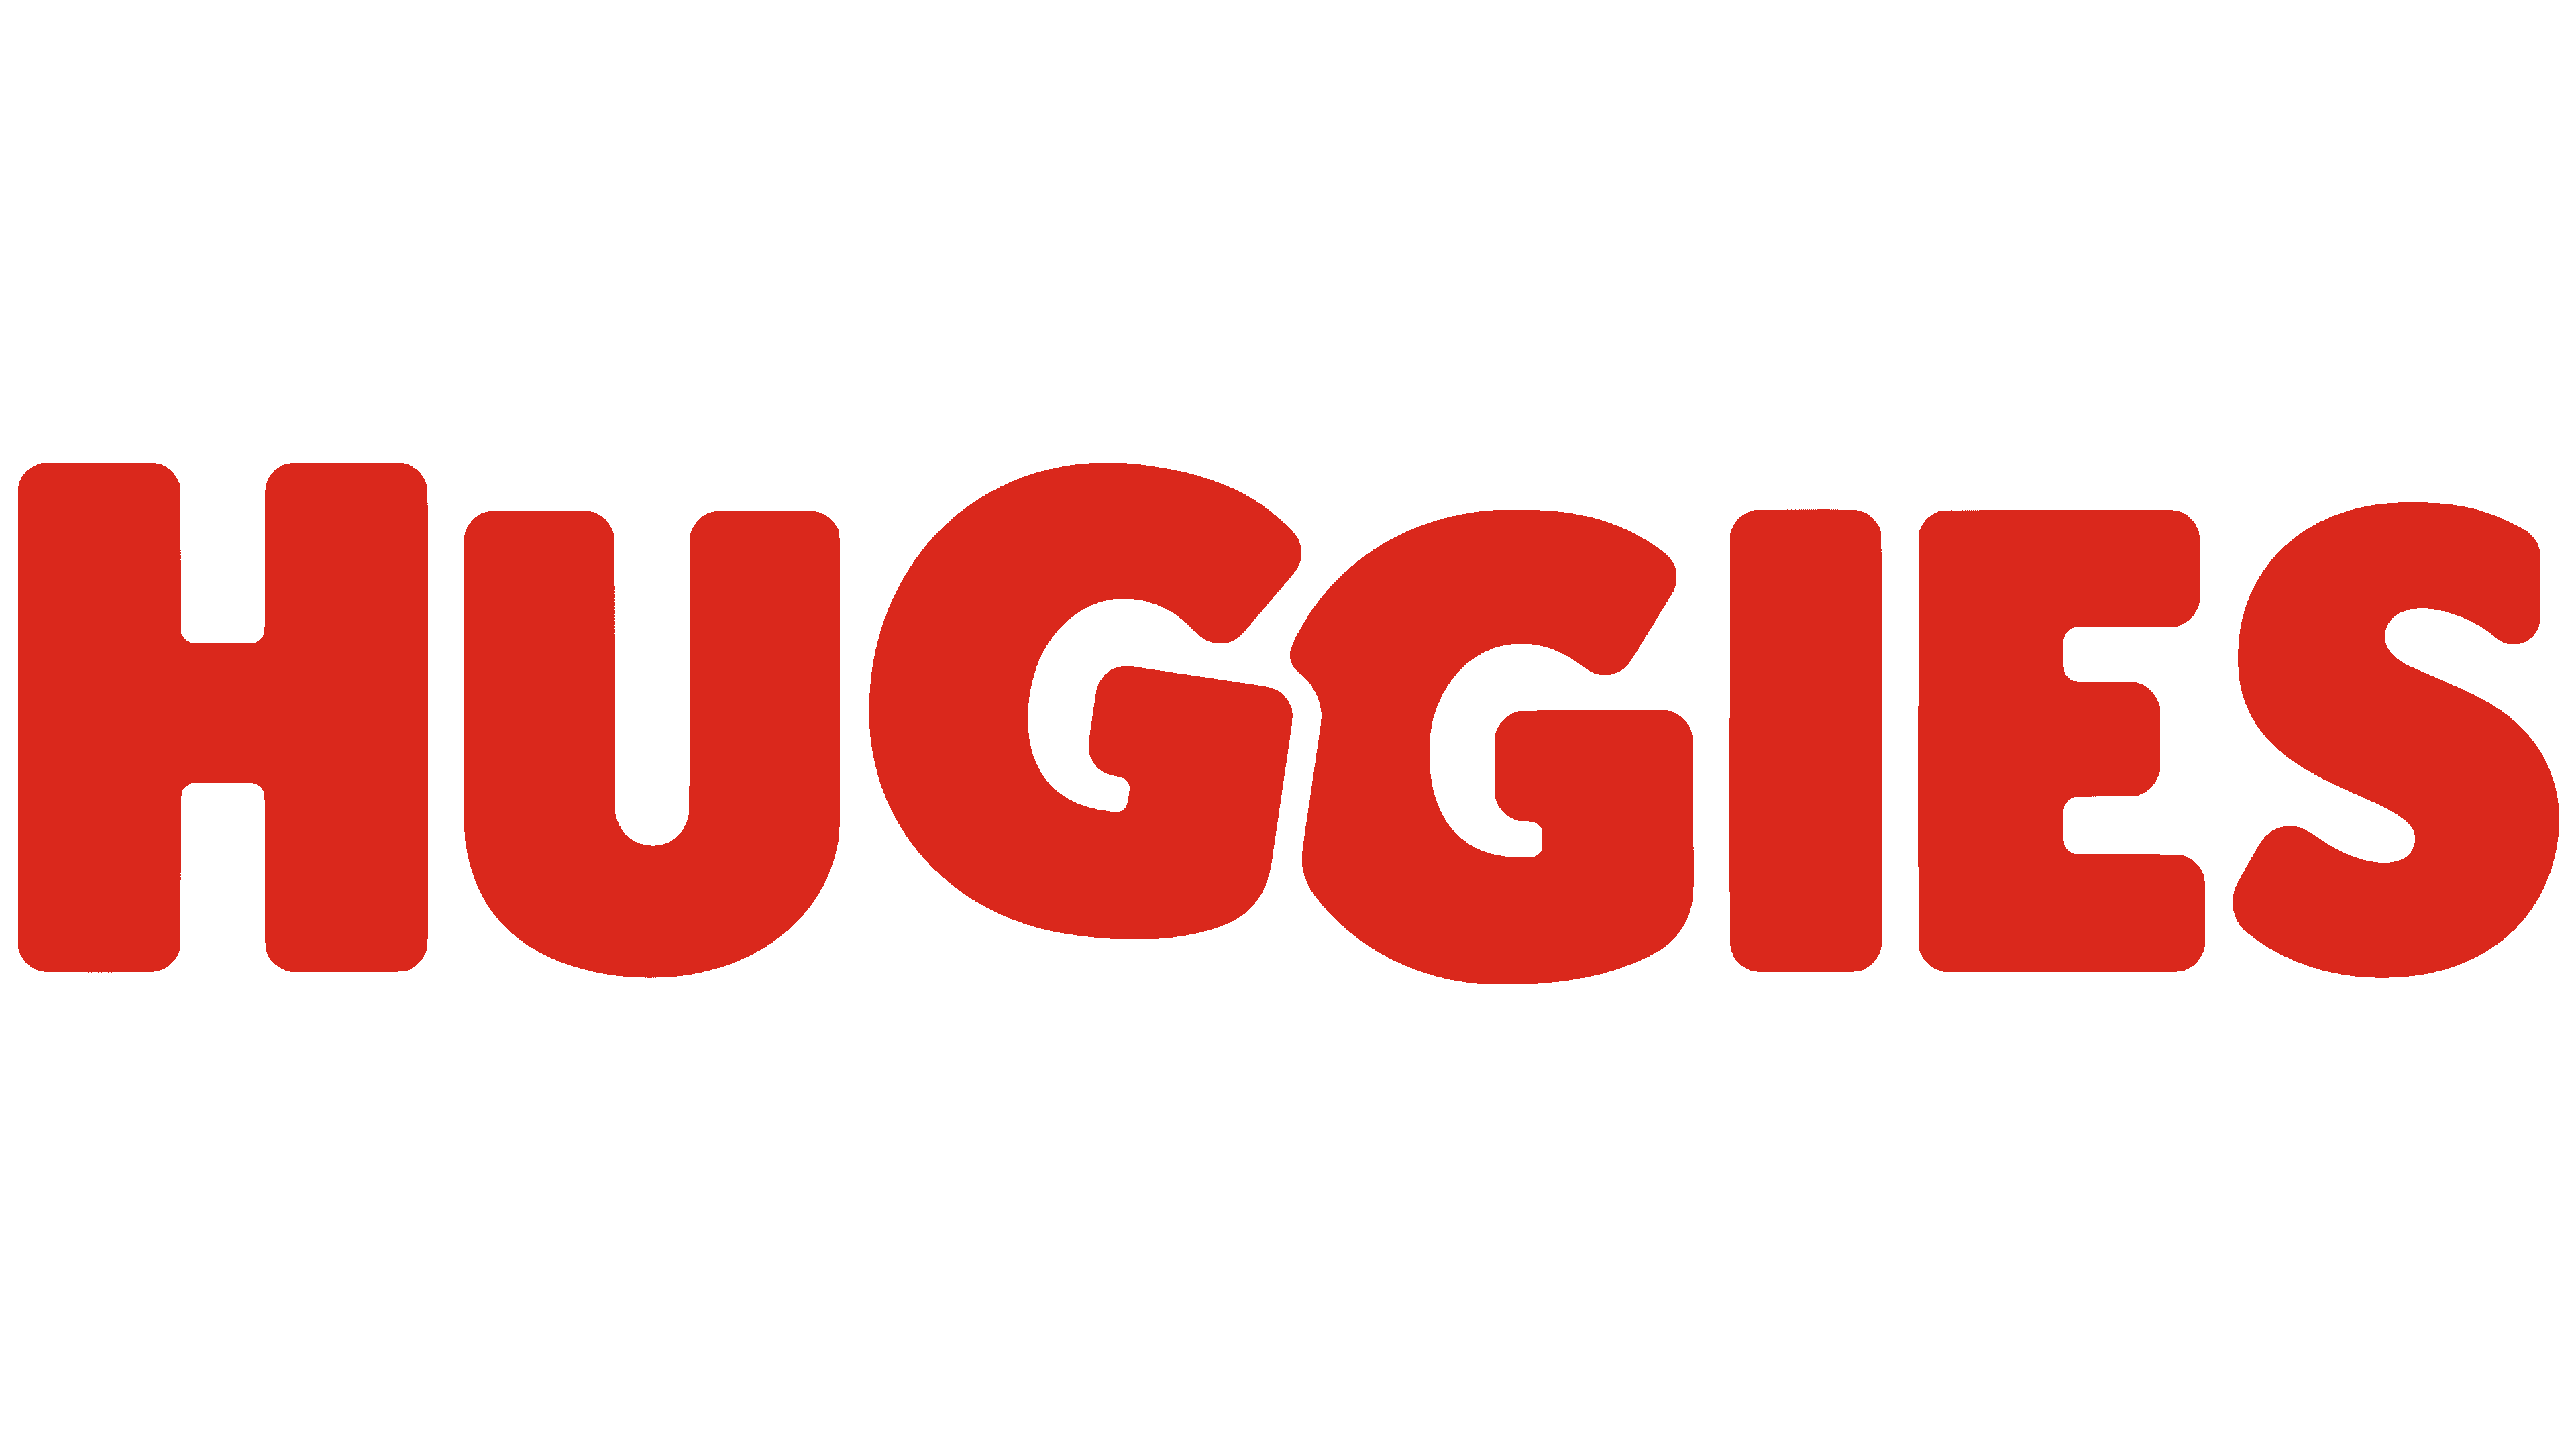 Huggies Brand Logo